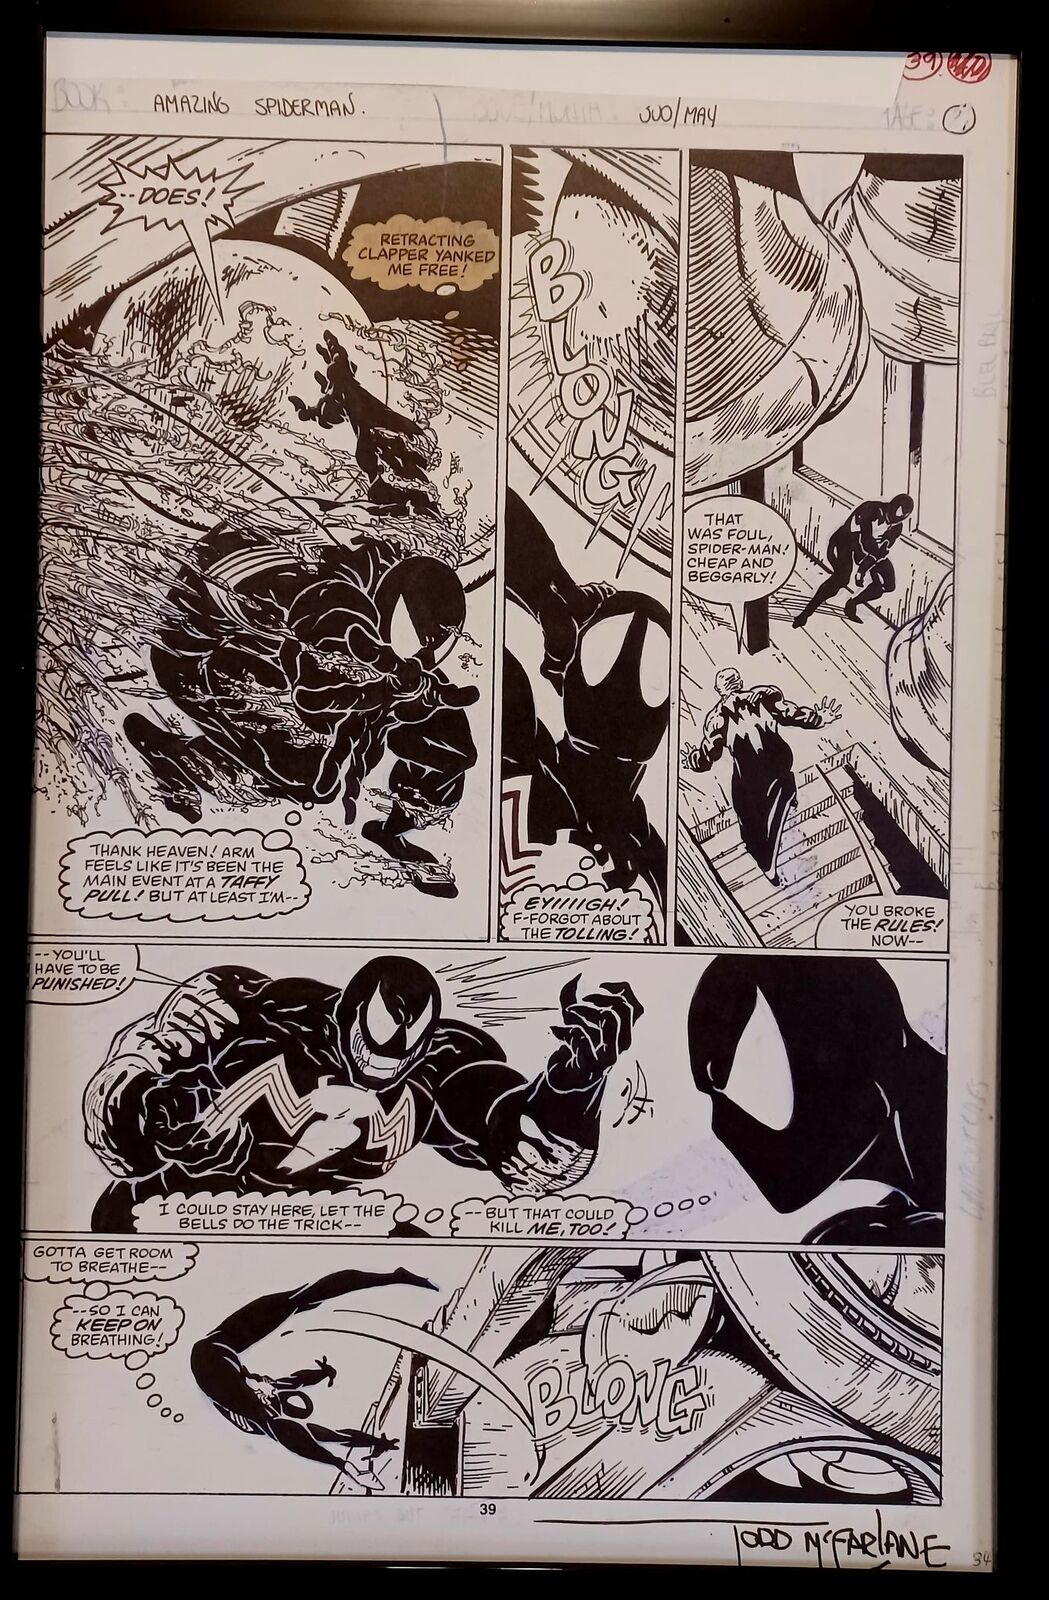 Amazing Spider-Man #300 pg. 34 by Todd McFarlane 11x17 FRAMED Original Art Print